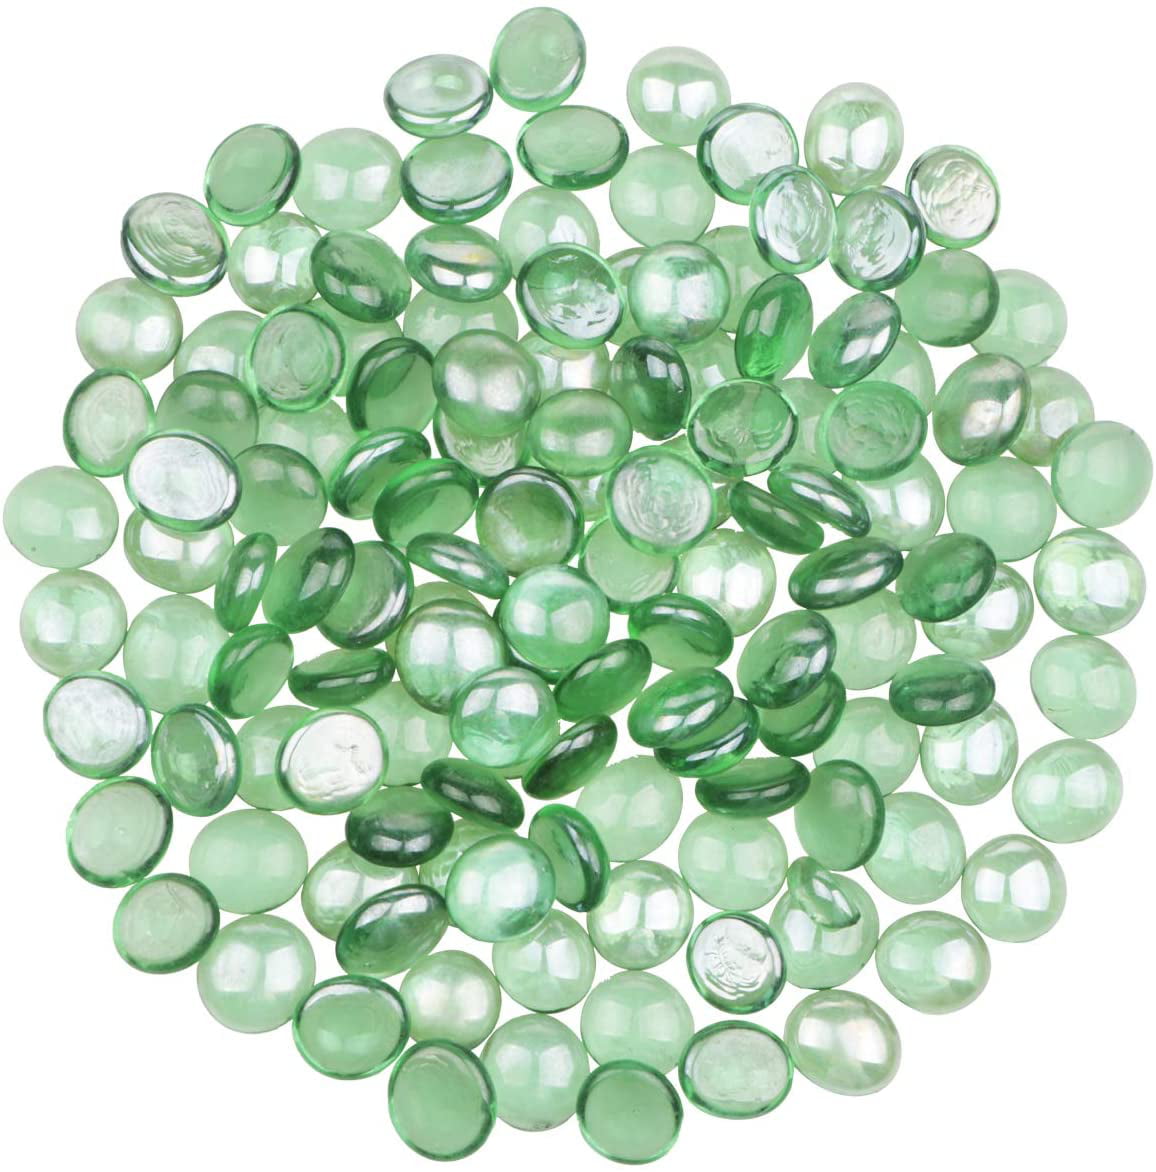 1 lb bag Vase Filler Beads Home-X Decorative Glass Beads Flat Bottom